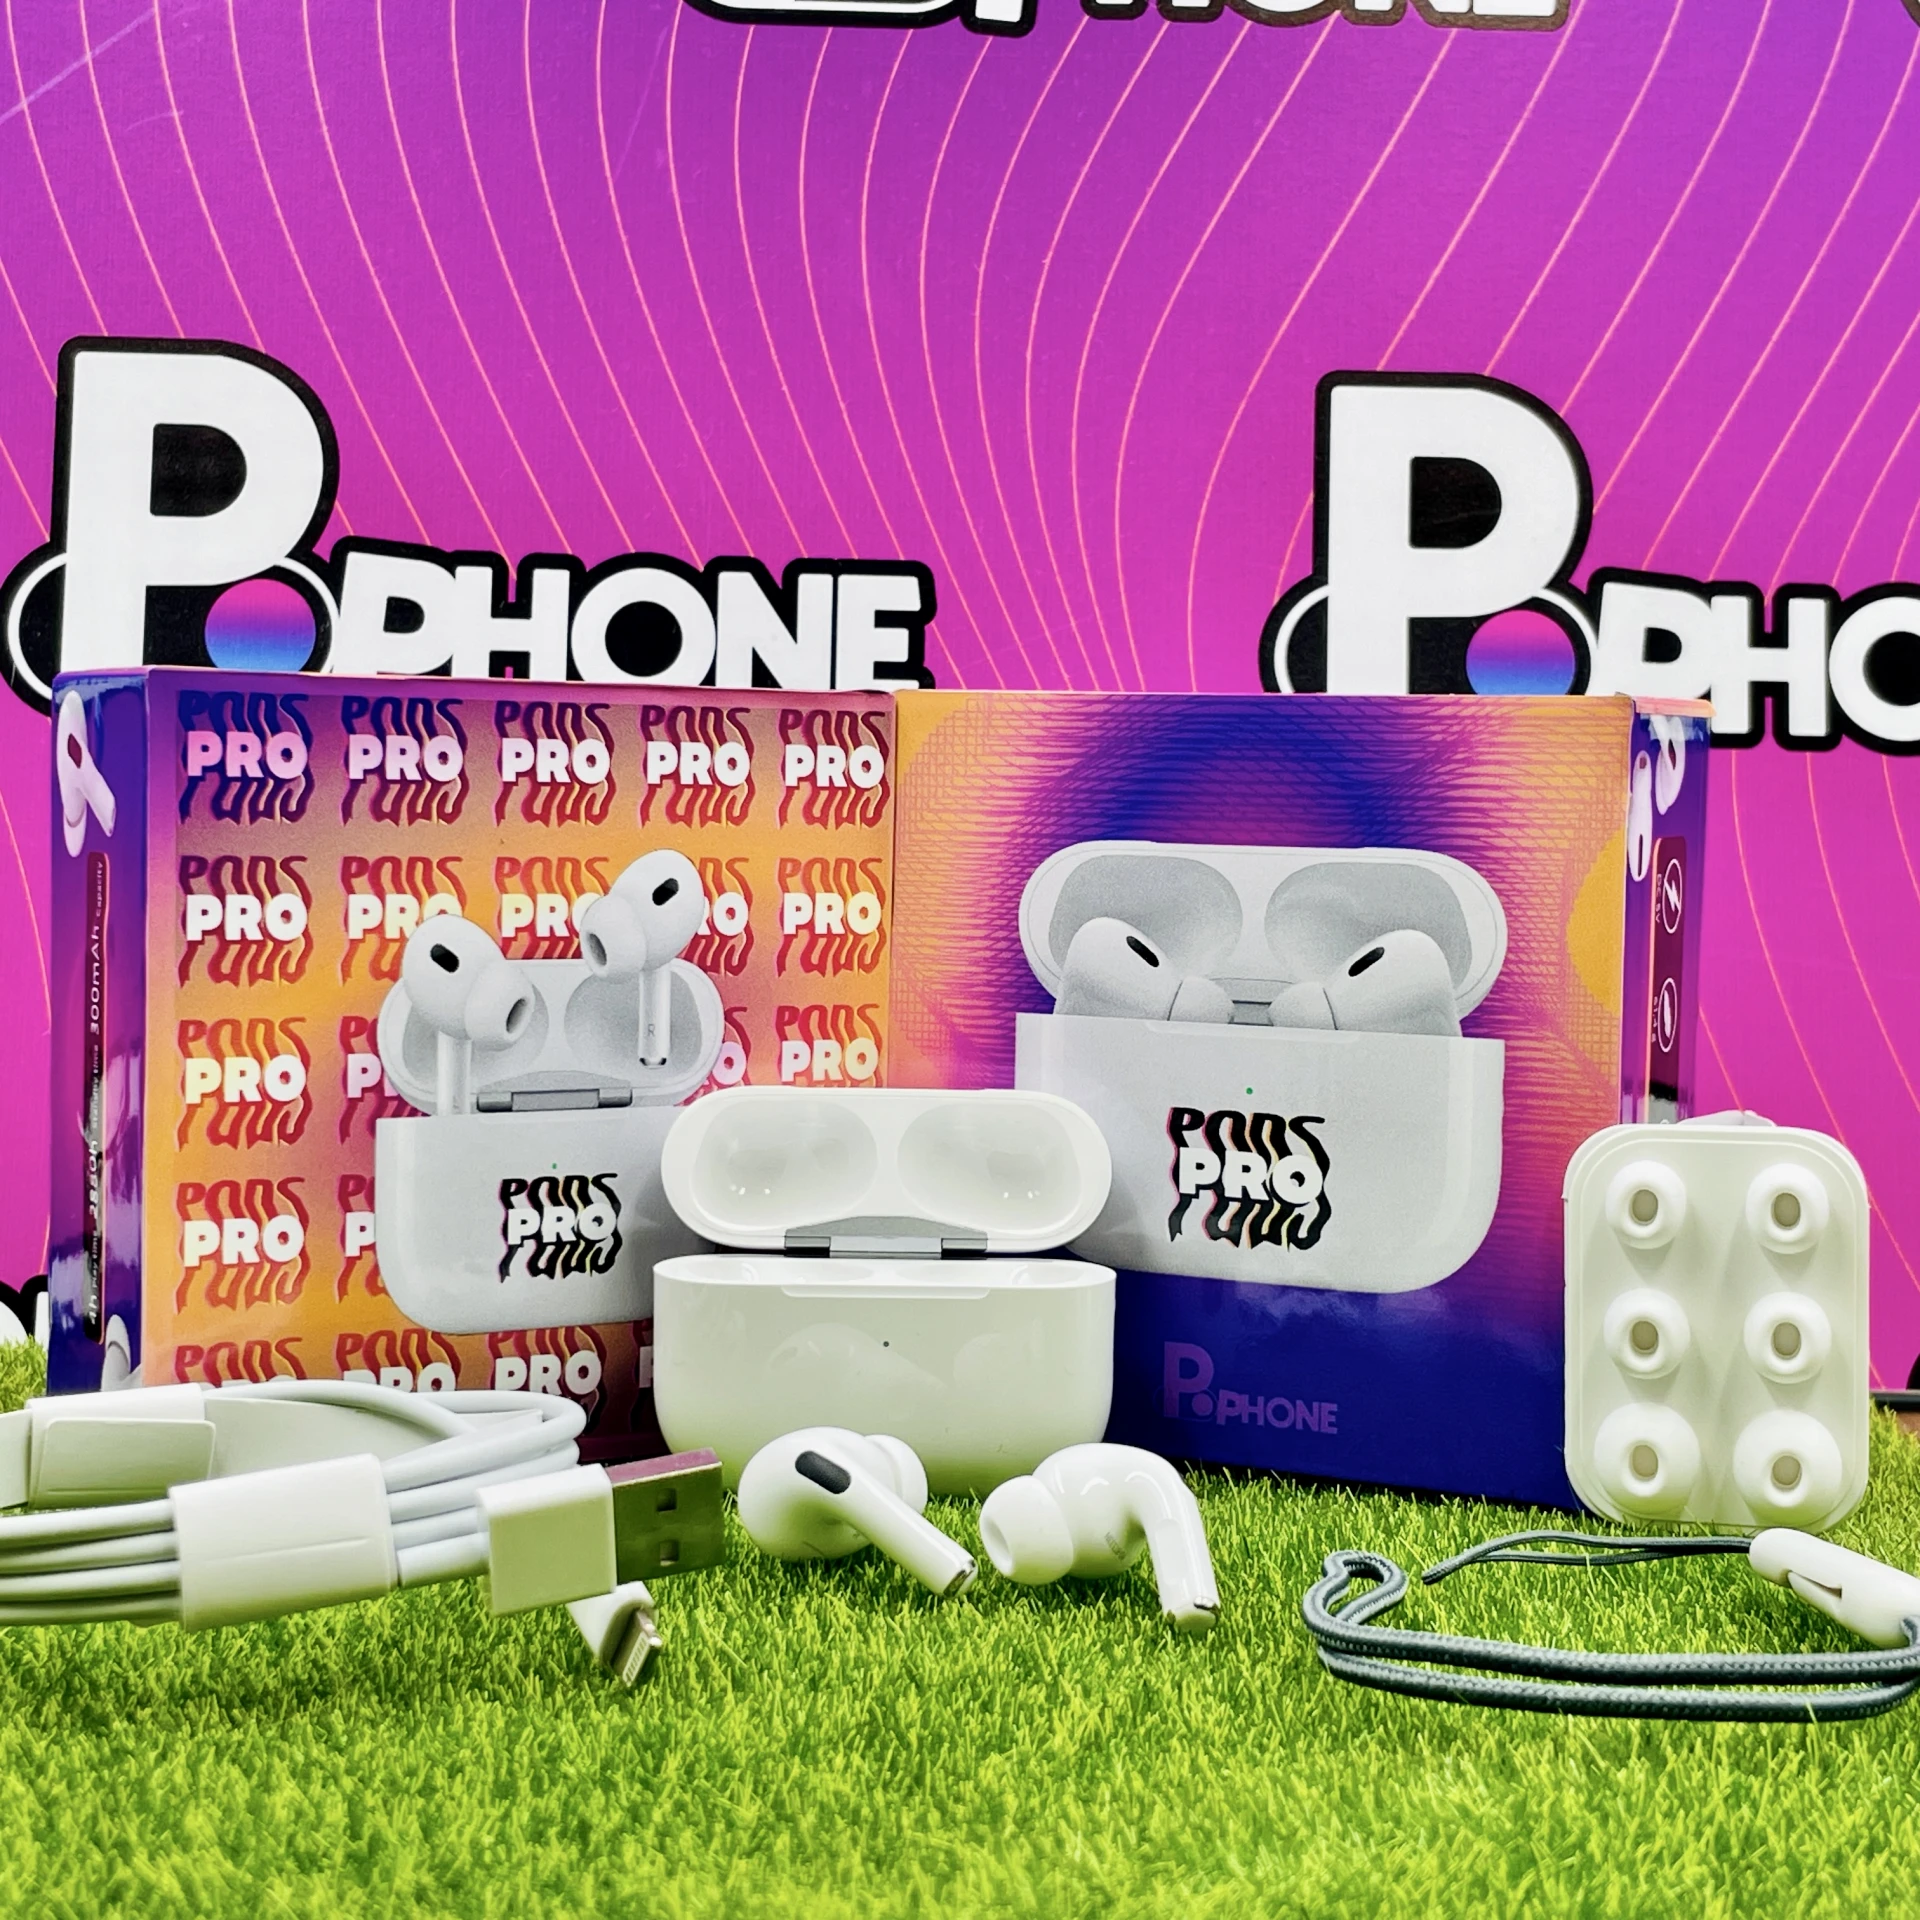 PoPhone Pods Pro